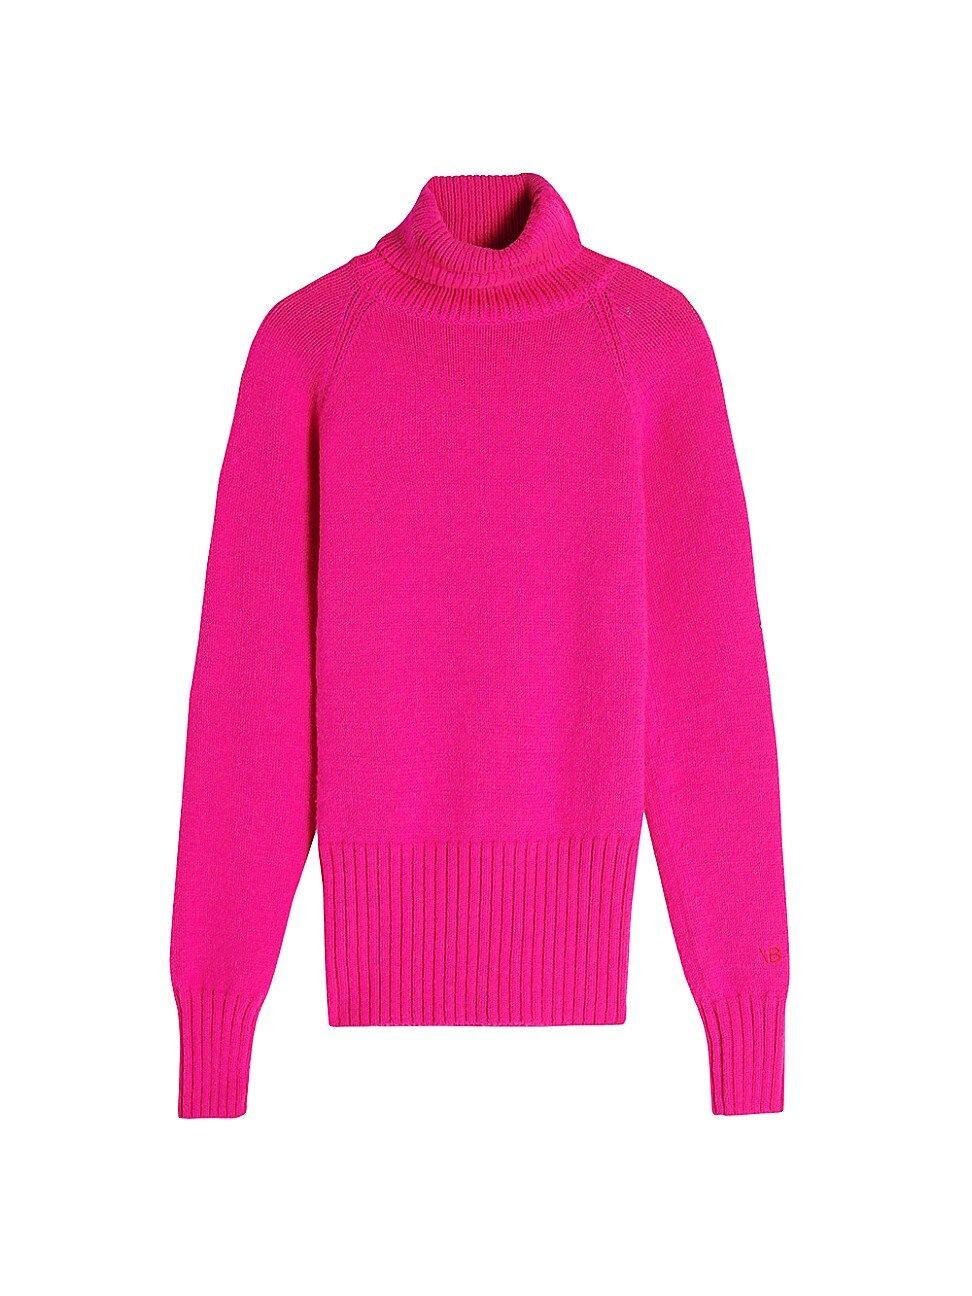 Victoria Beckham Neon Wool Turtleneck Sweater | Saks Fifth Avenue